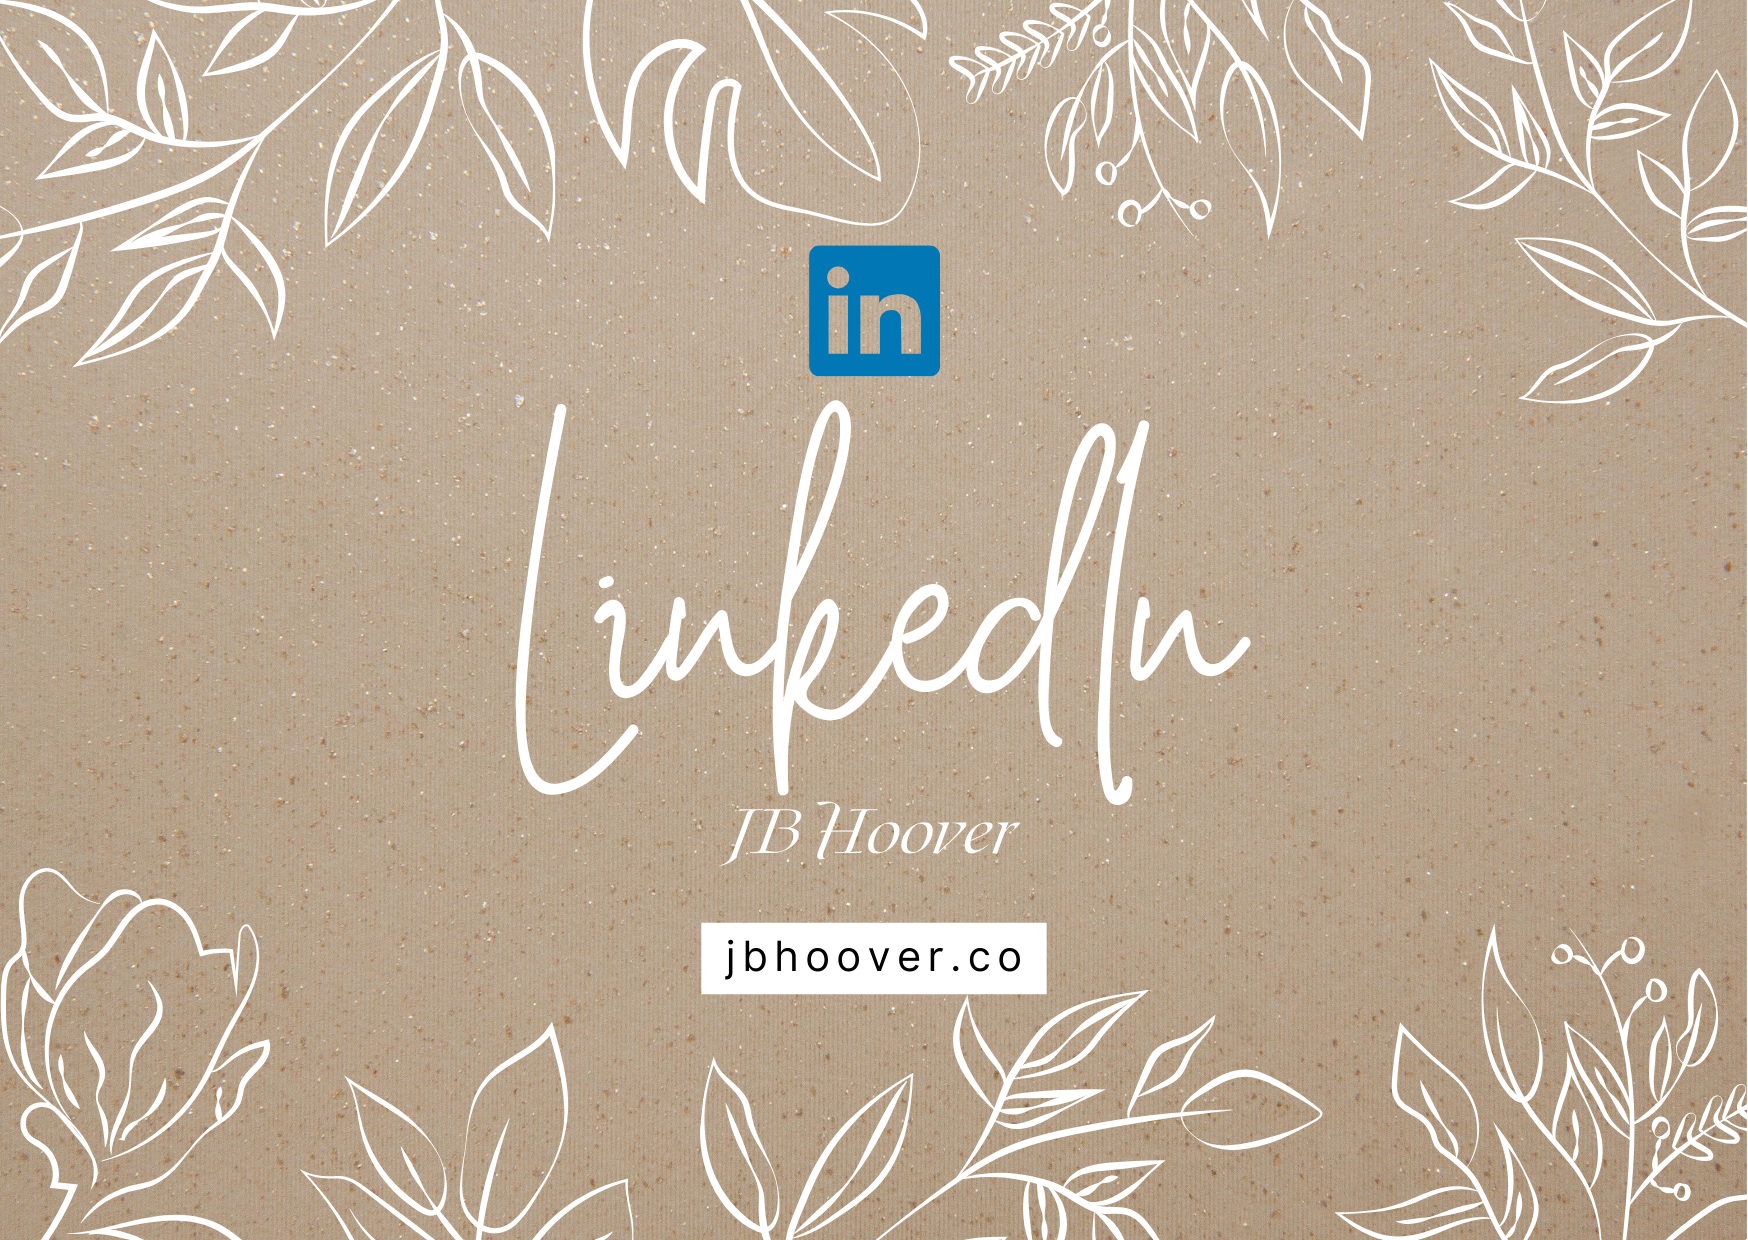 JB Hoover LinkedIn